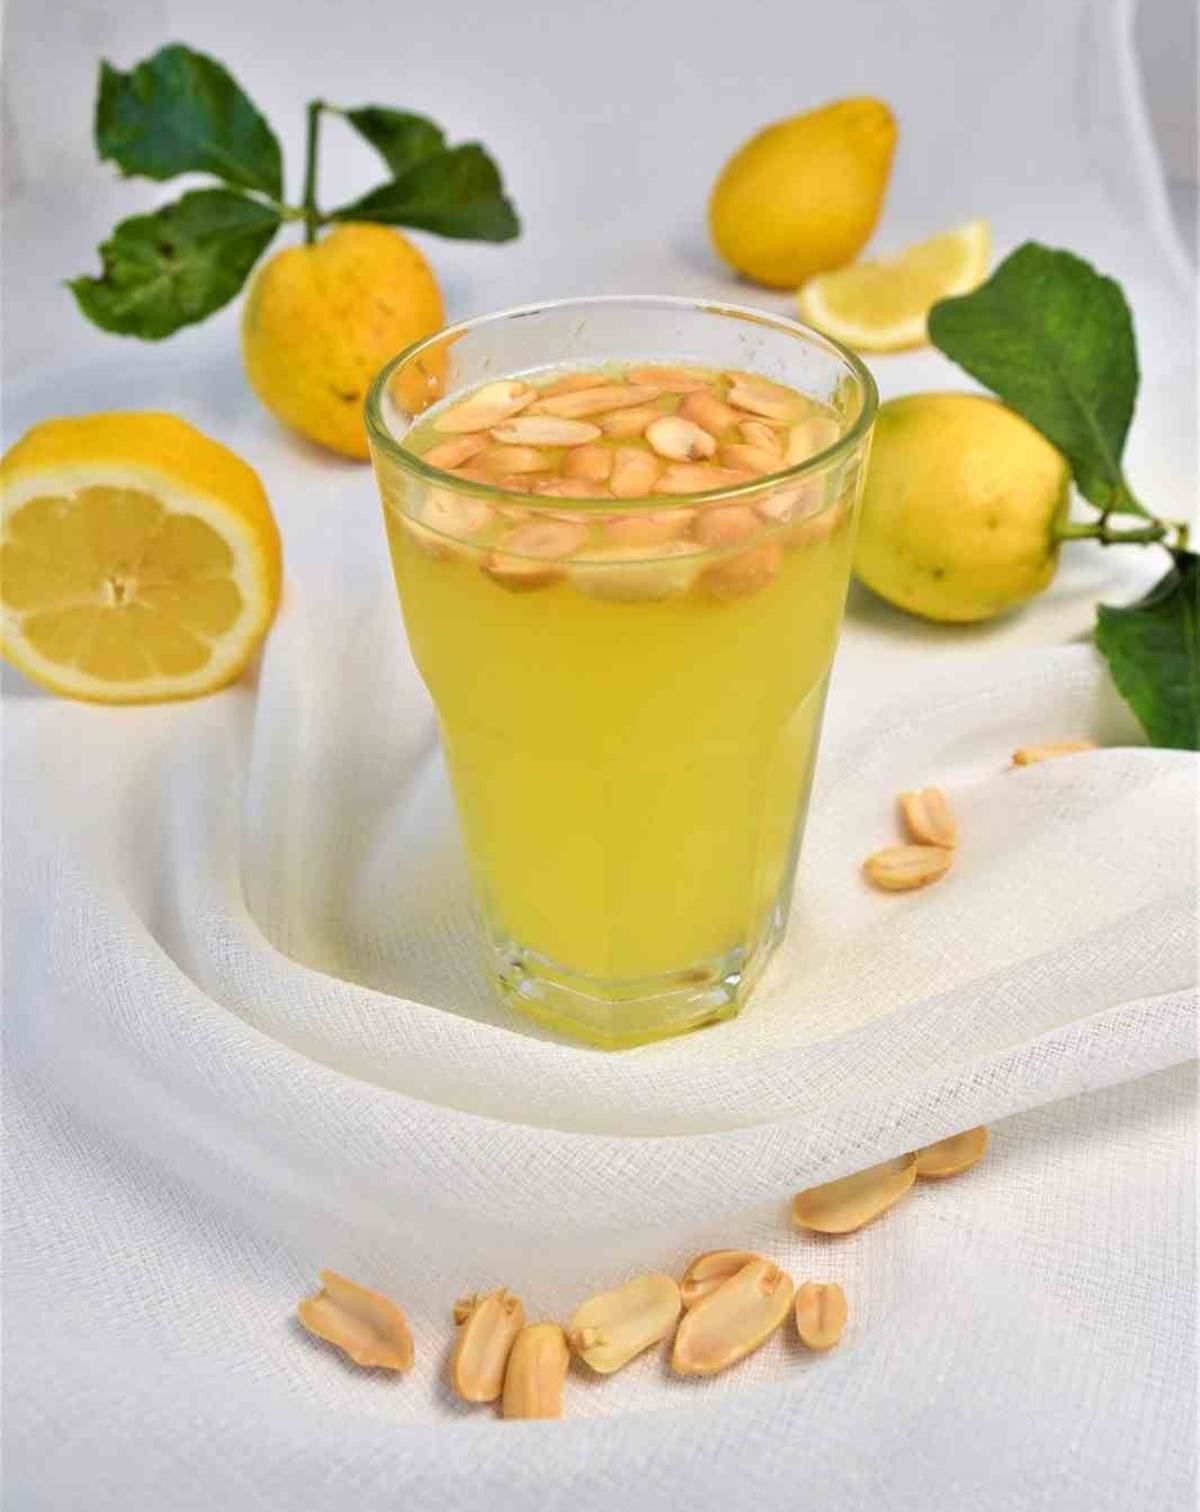 fistikli-limonata-hangi-yoreye-ait.jpg